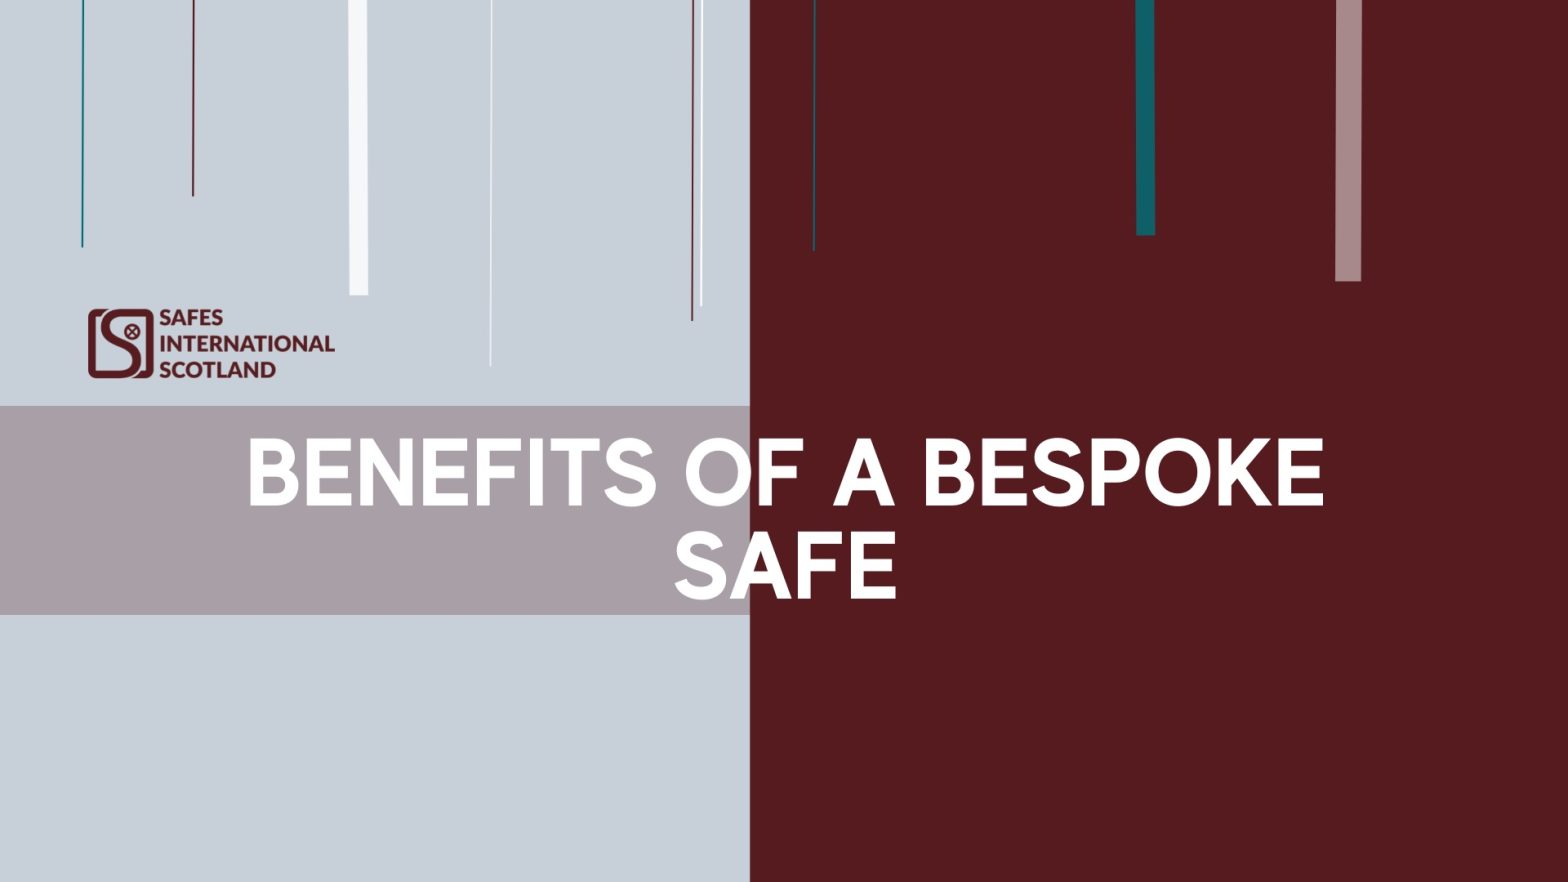 Benefits of a bespoke safe